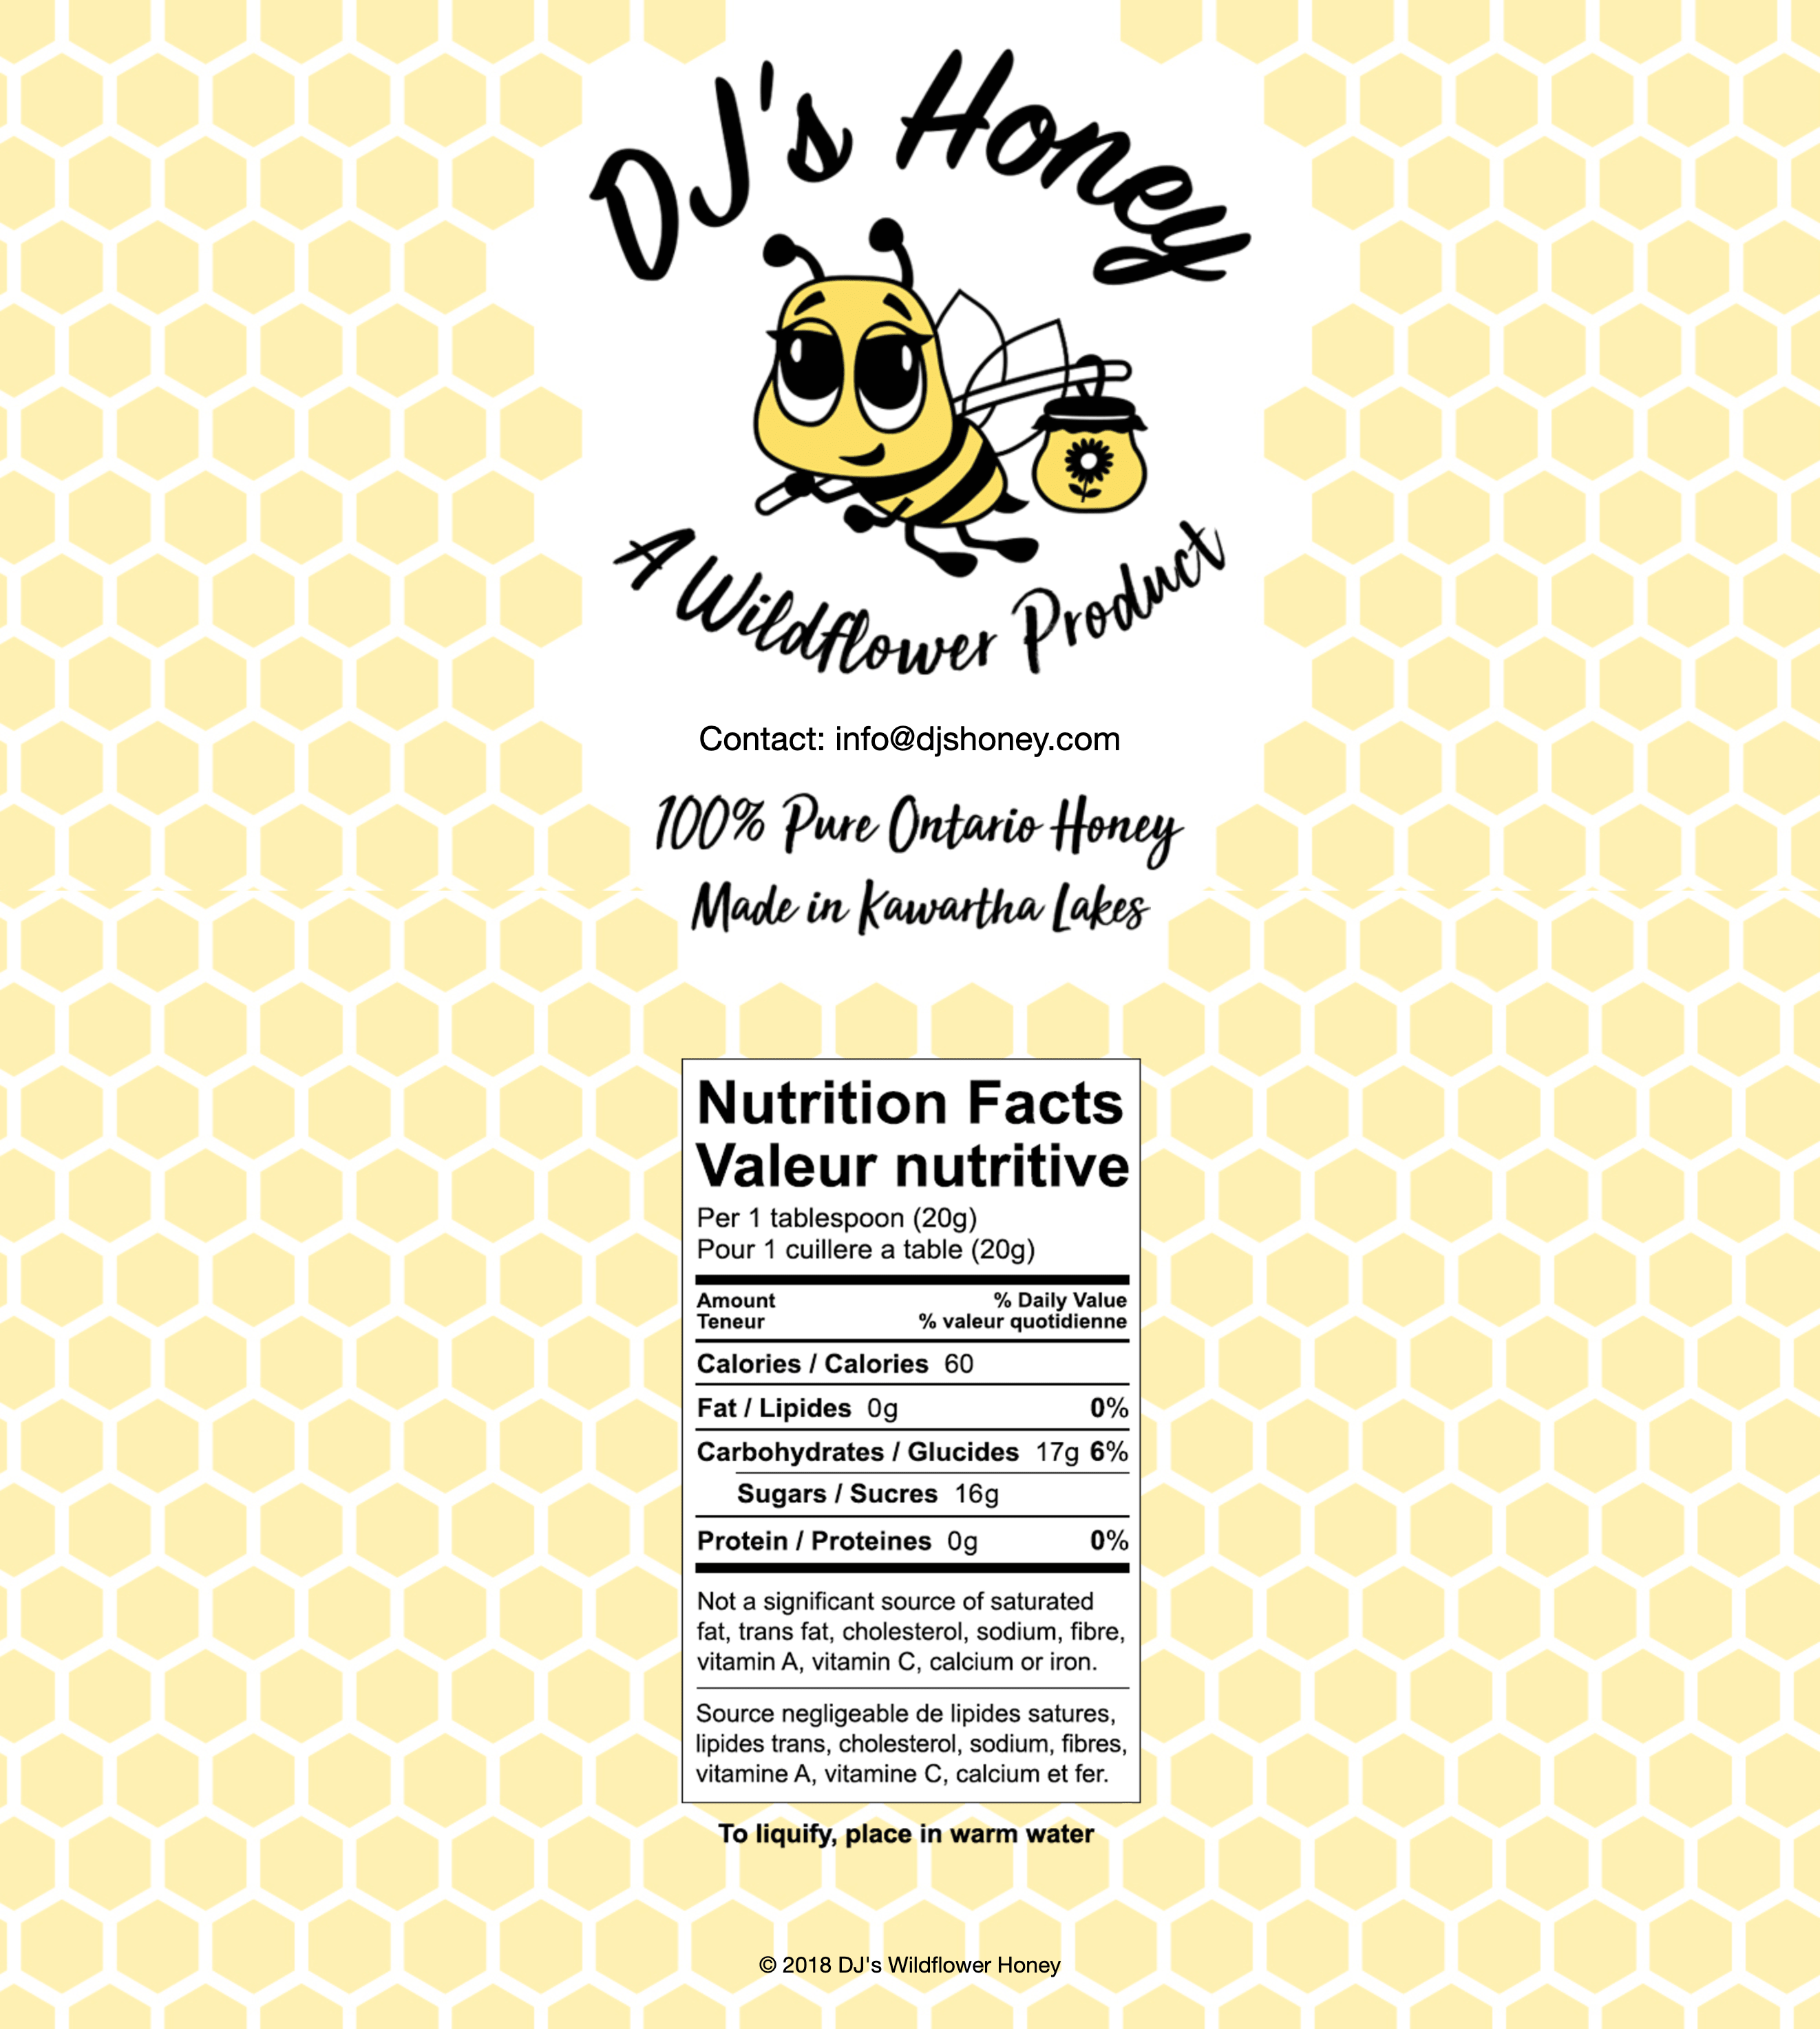 DJ's Honey Website Design